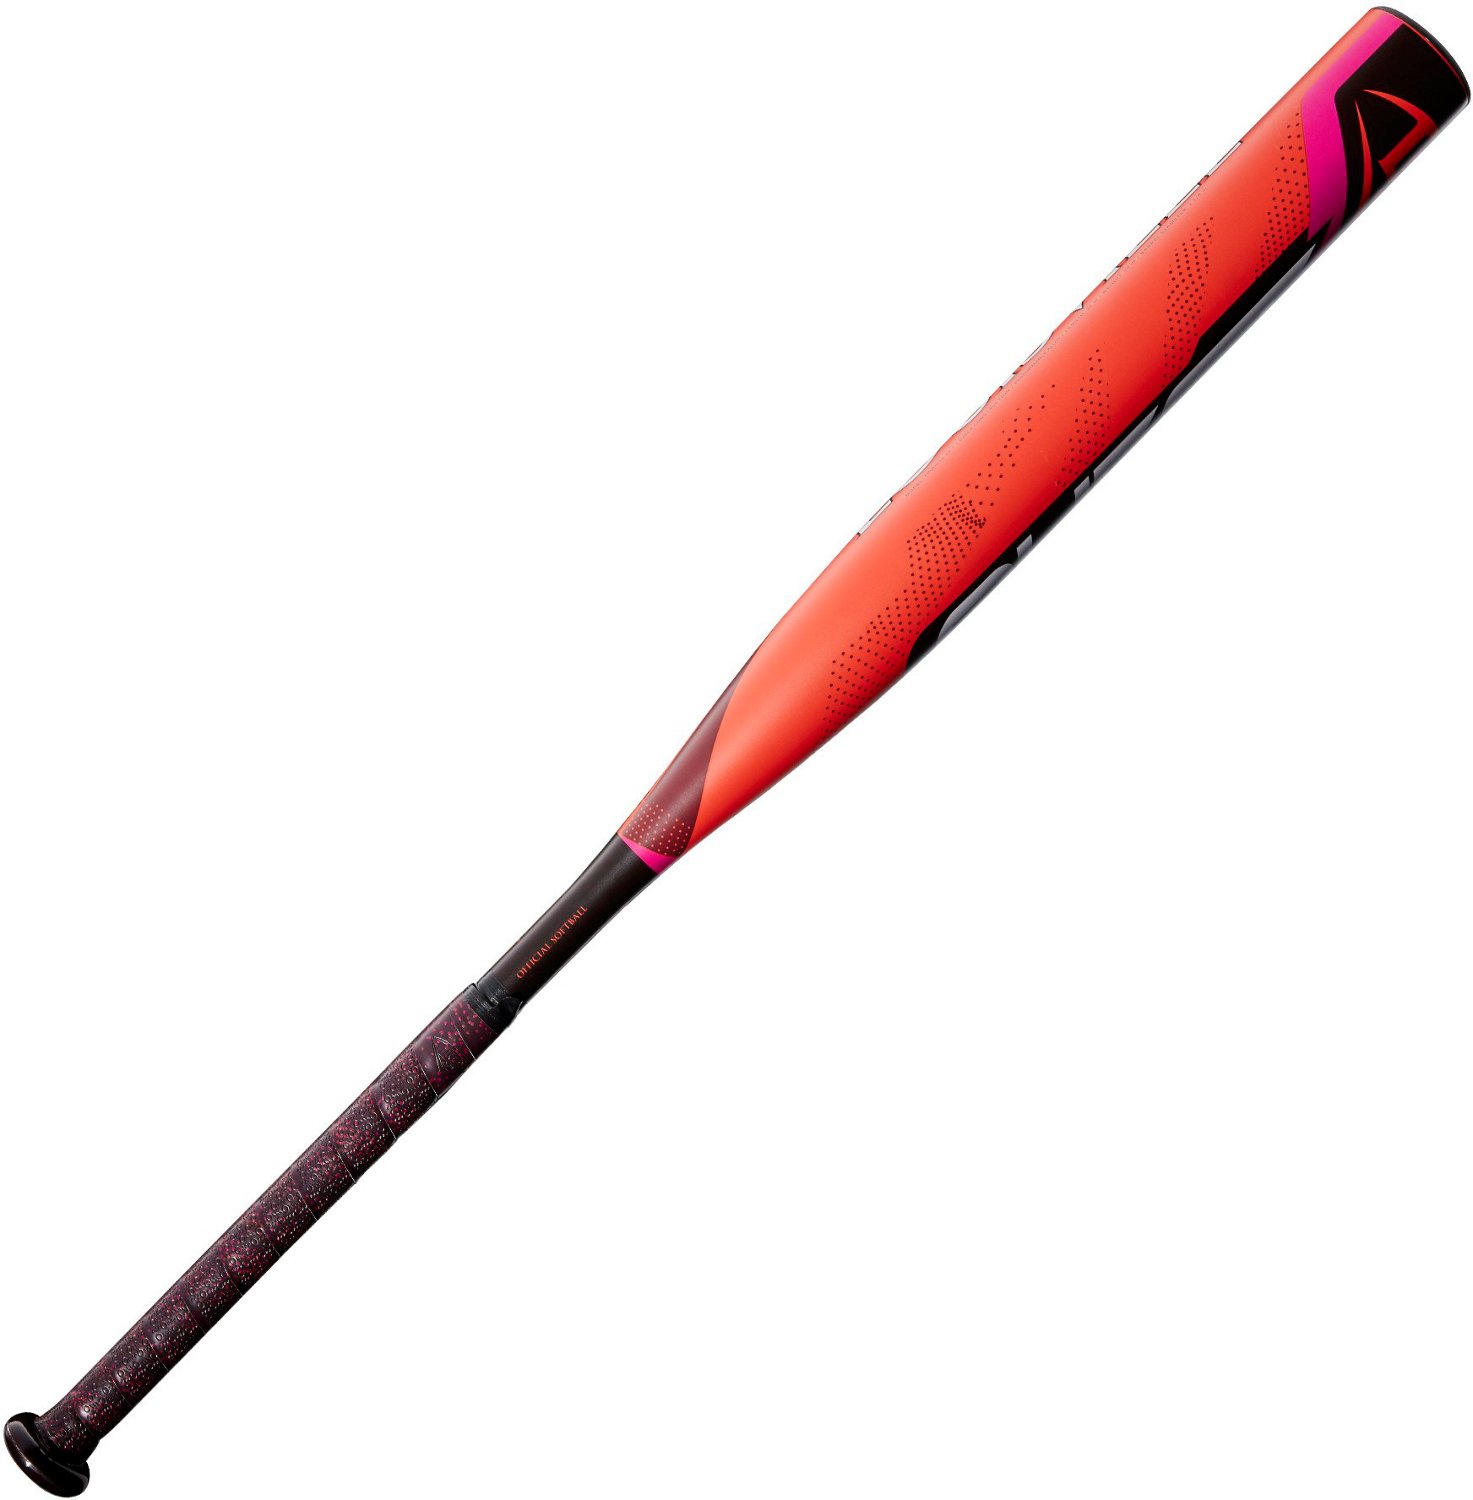 Louisville Slugger Proven 2022 Fastpitch Softball Bat (-13)